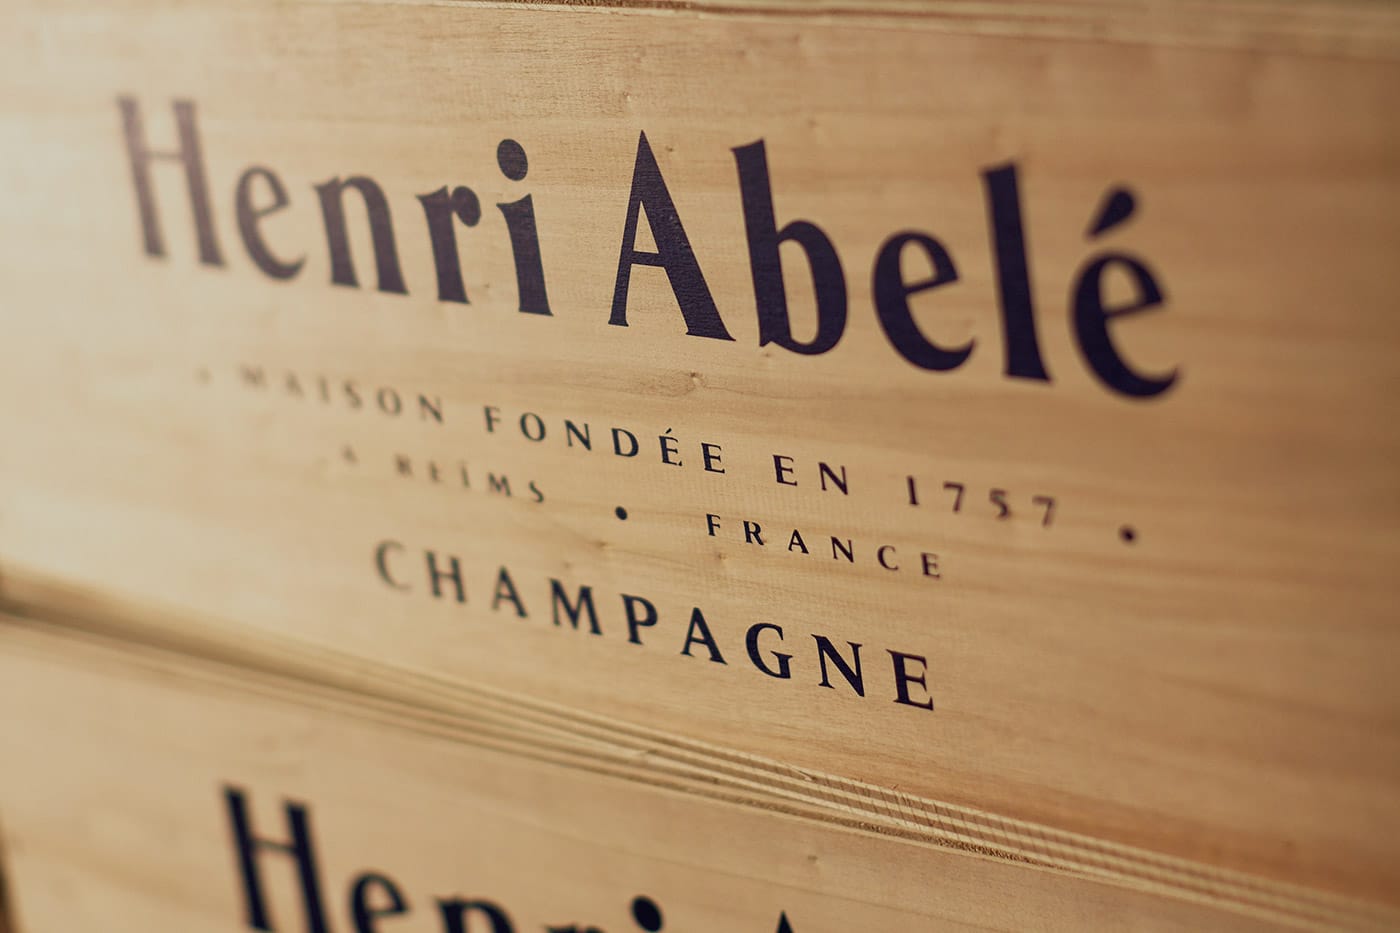 Weinkiste Henri Abele Champagner